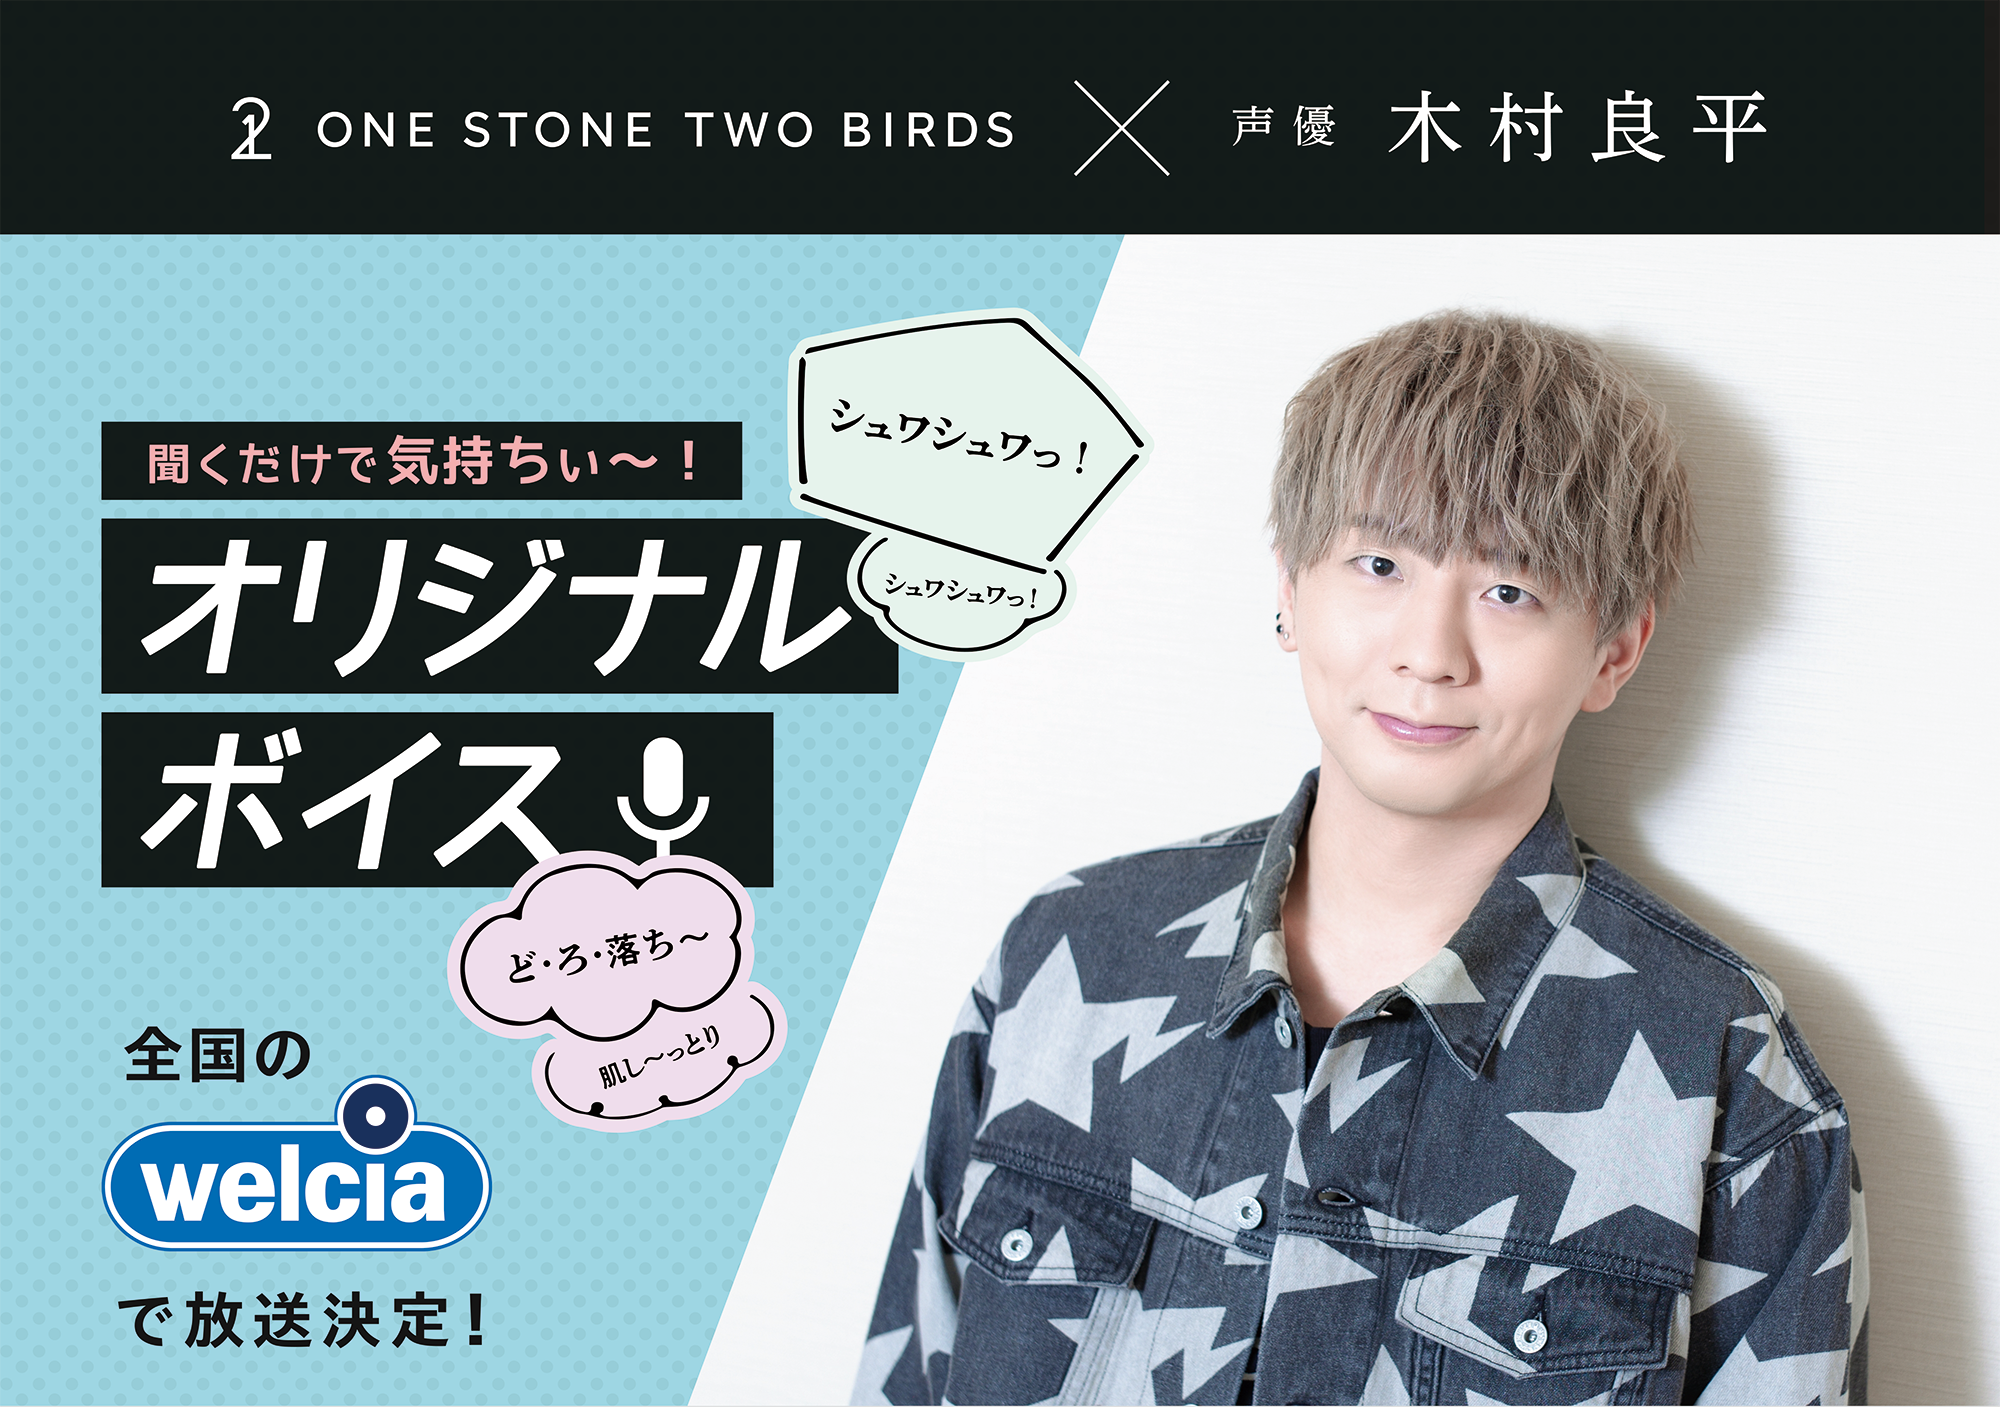 ONE STONE TWO BIRDS公式ブランドサイト｜ワンストーンツーバーズ - 1